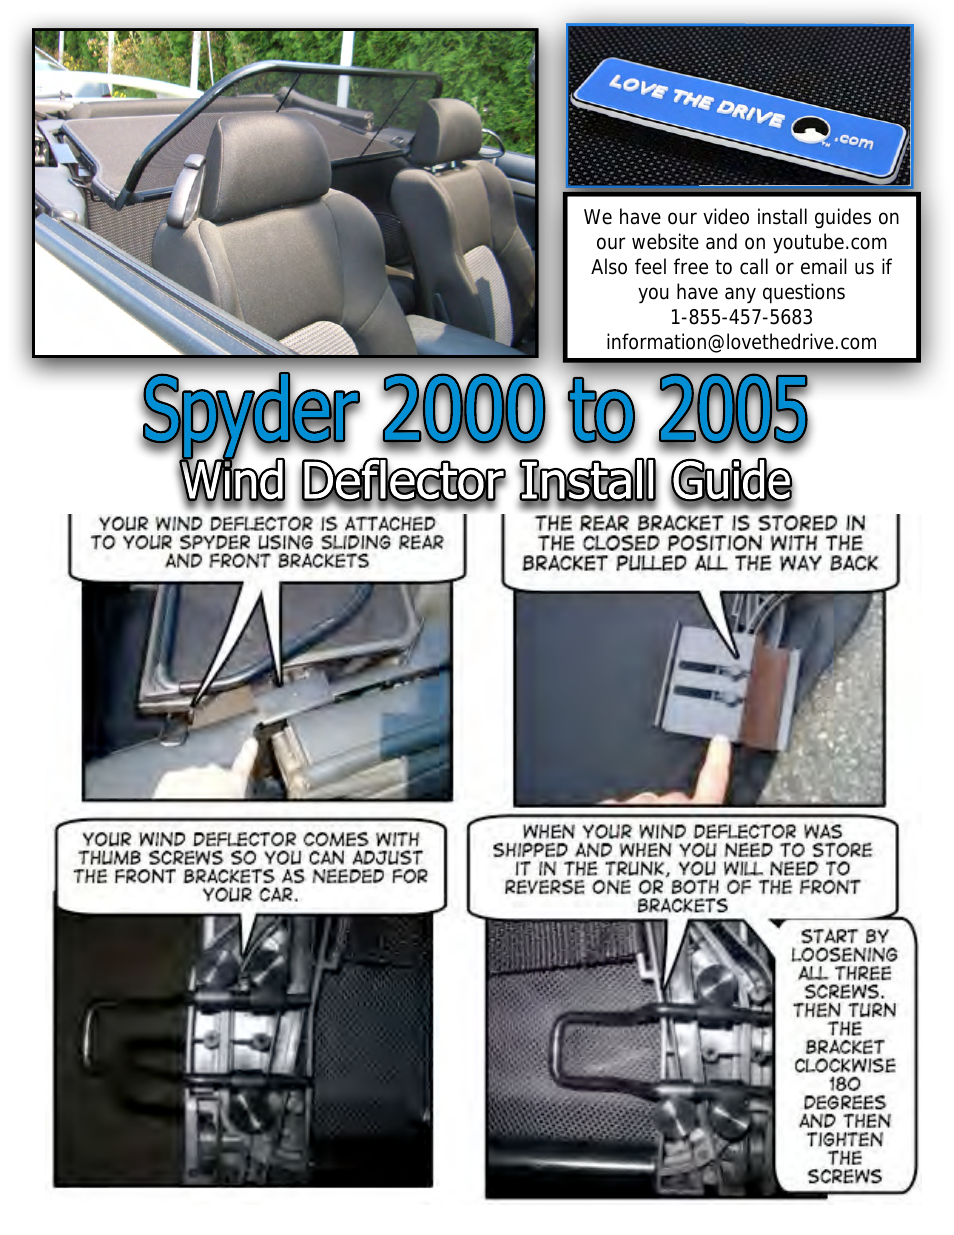 Spyder Wind Deflector 2000 to 2005